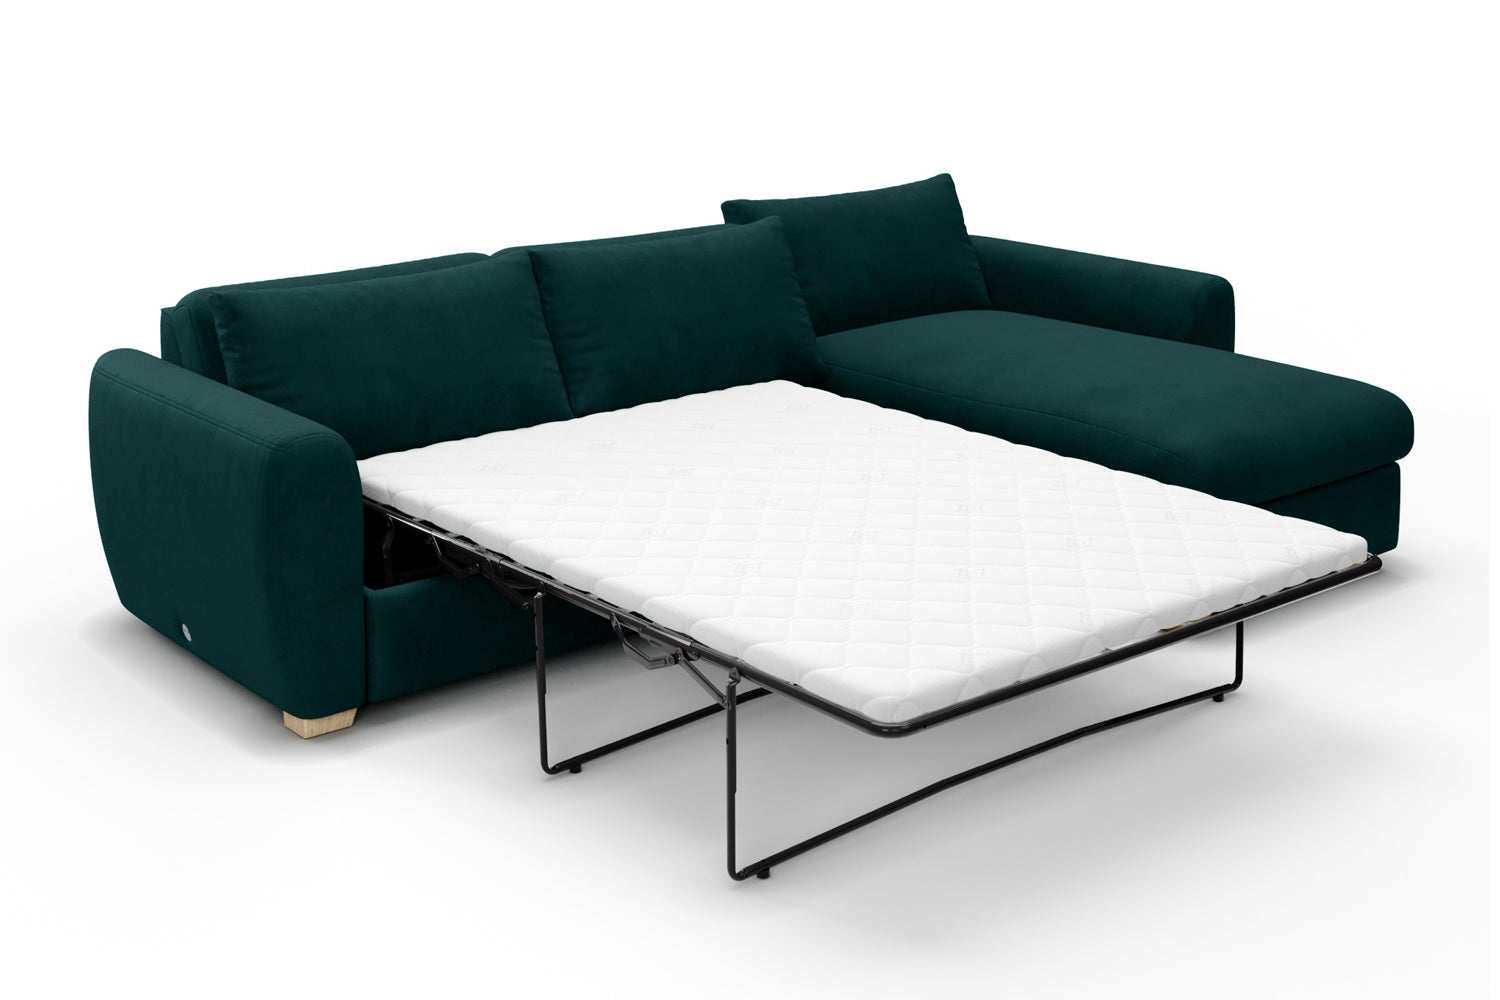 SNUG | The Cloud Sundae Chaise Sofa Bed in Pine Green